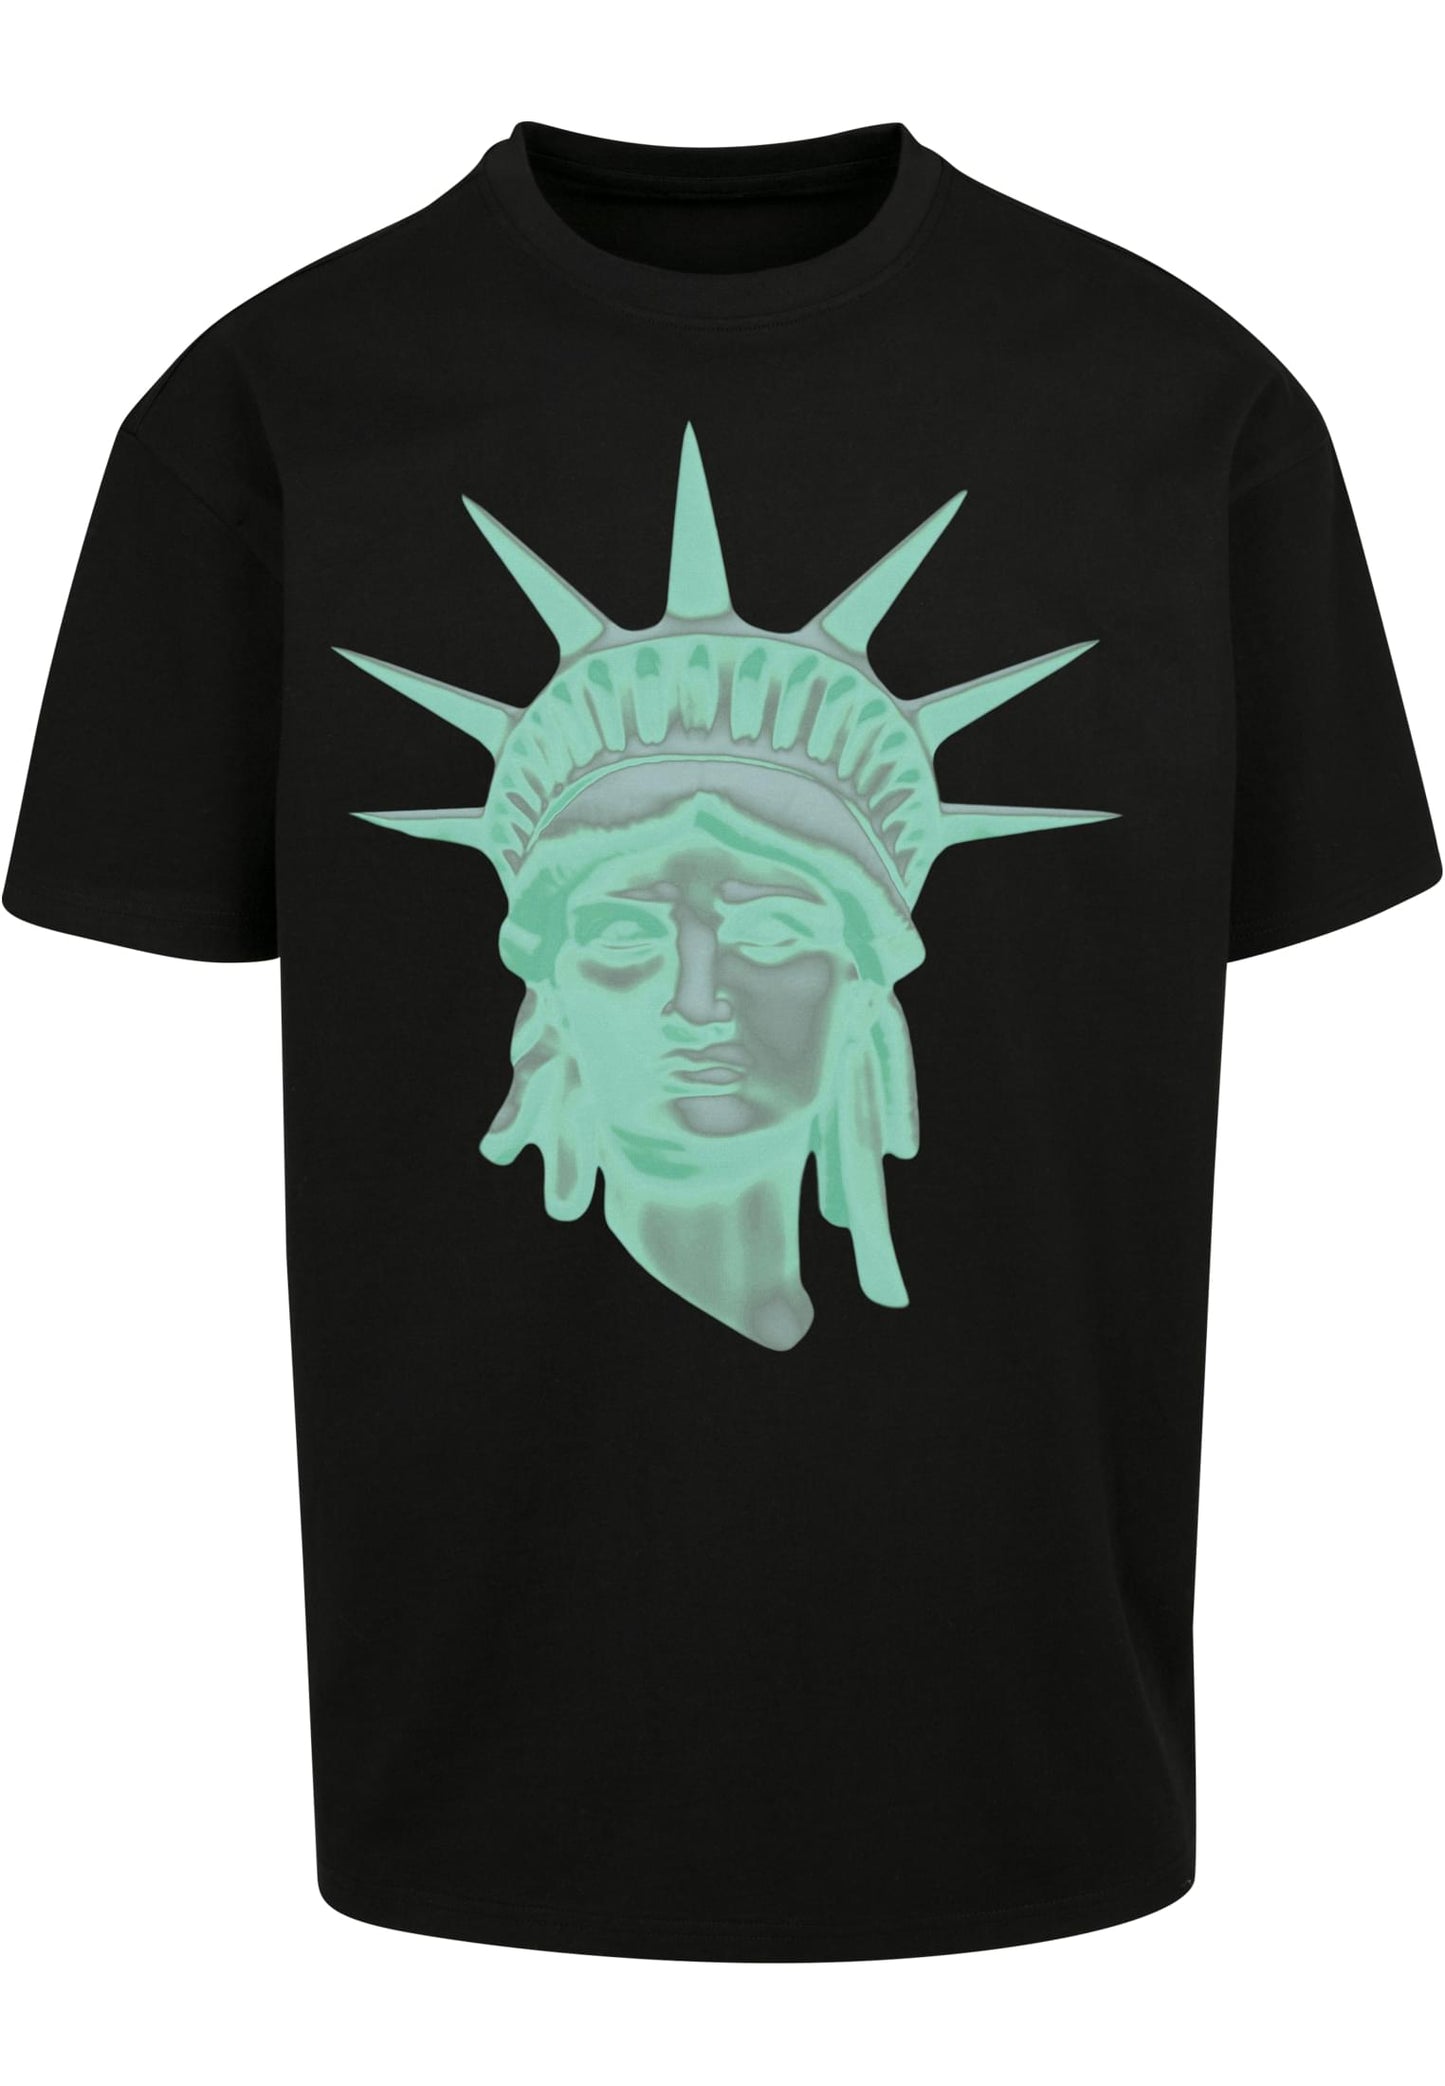 Mister Tee Upscale Liberty T-Shirt